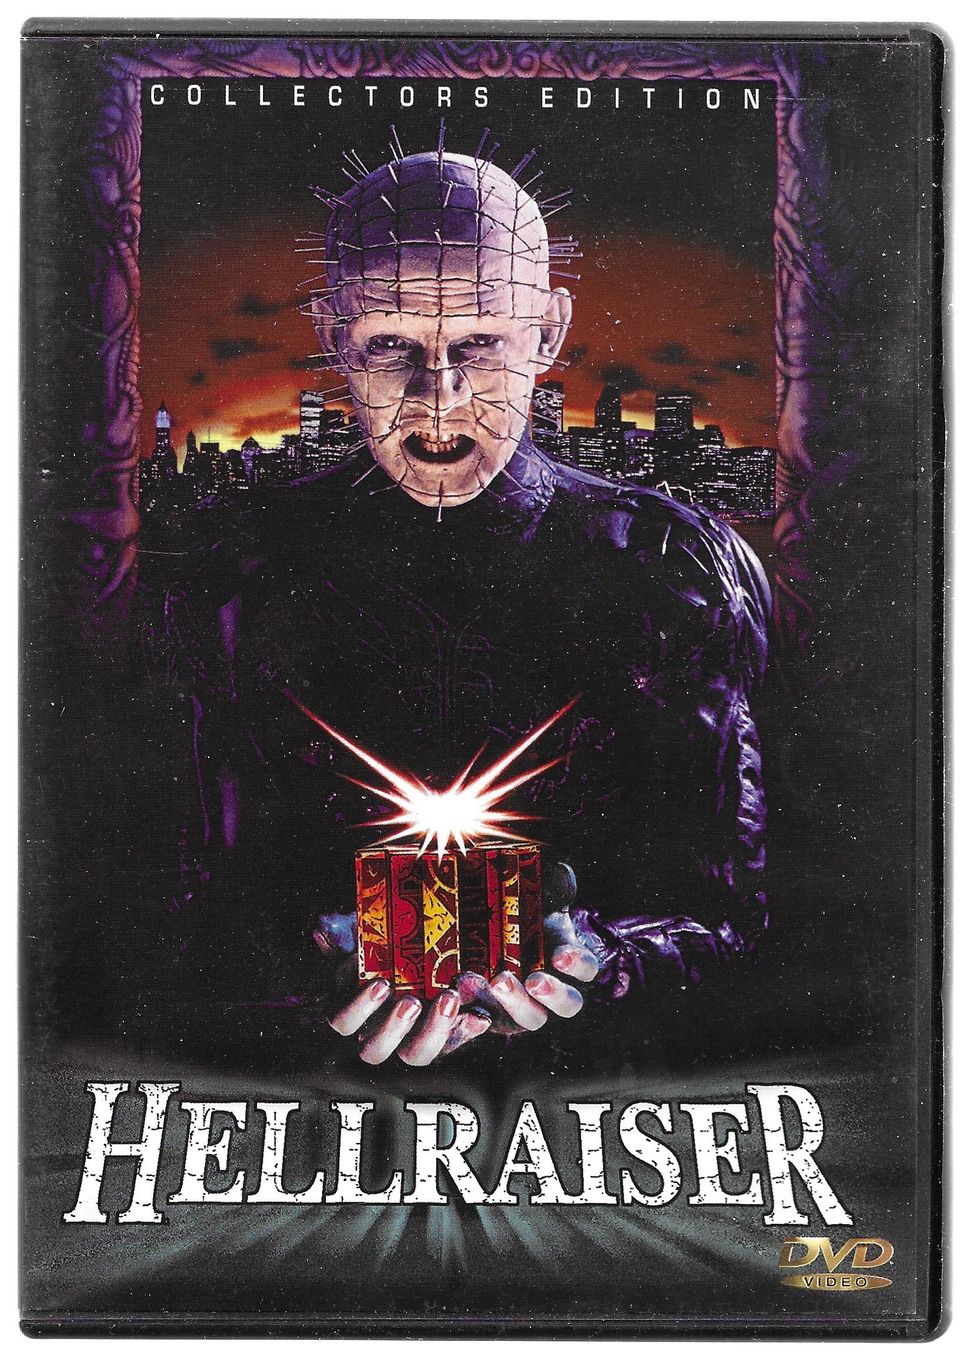 DVD Hellraiser